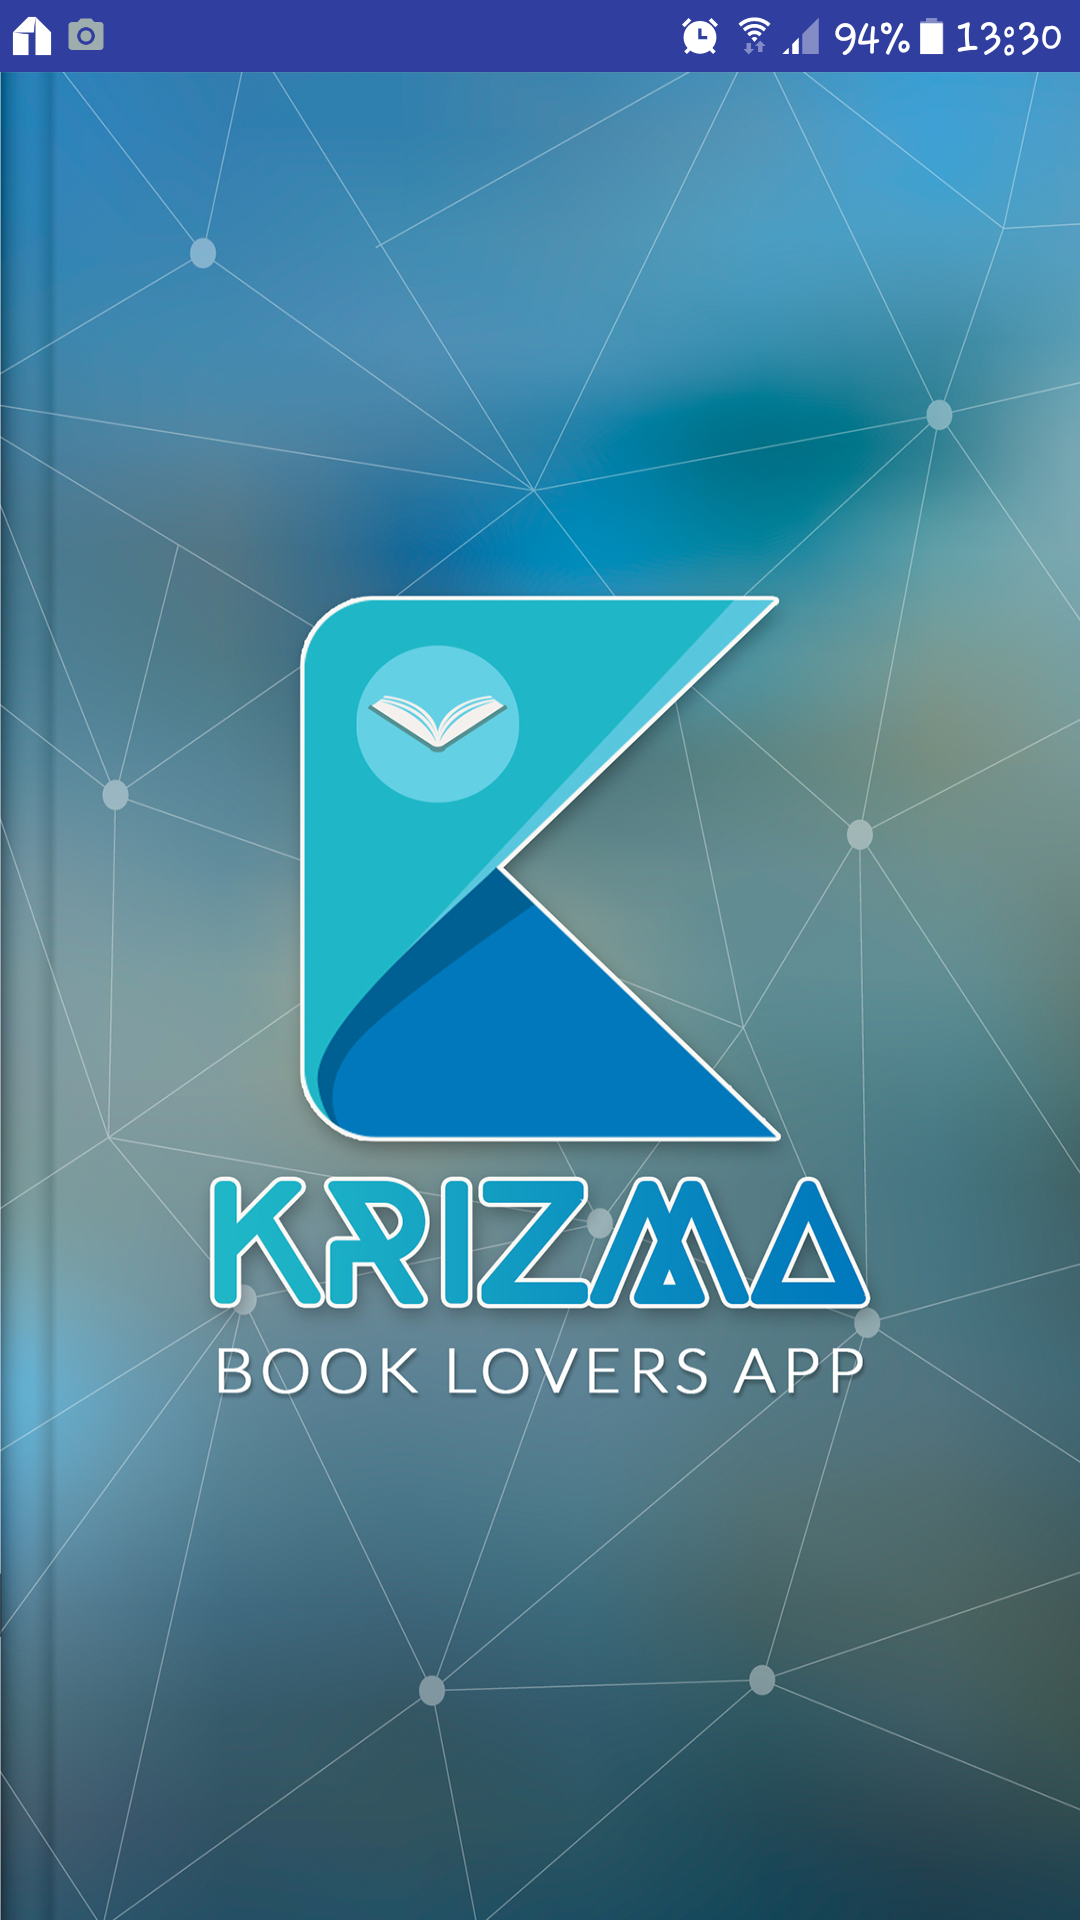 Krizma BookLover App